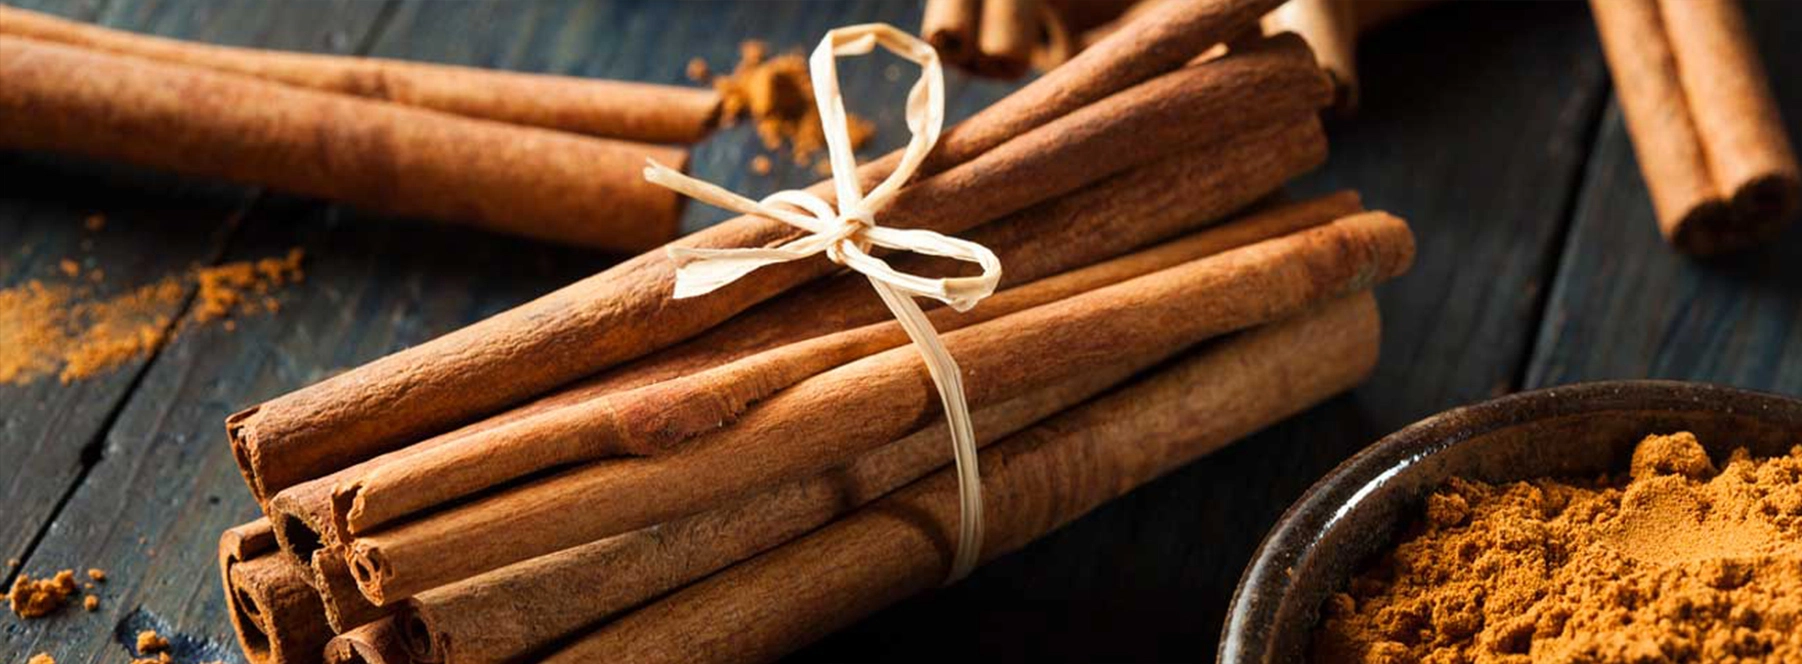 Cassia/Cinnamon export